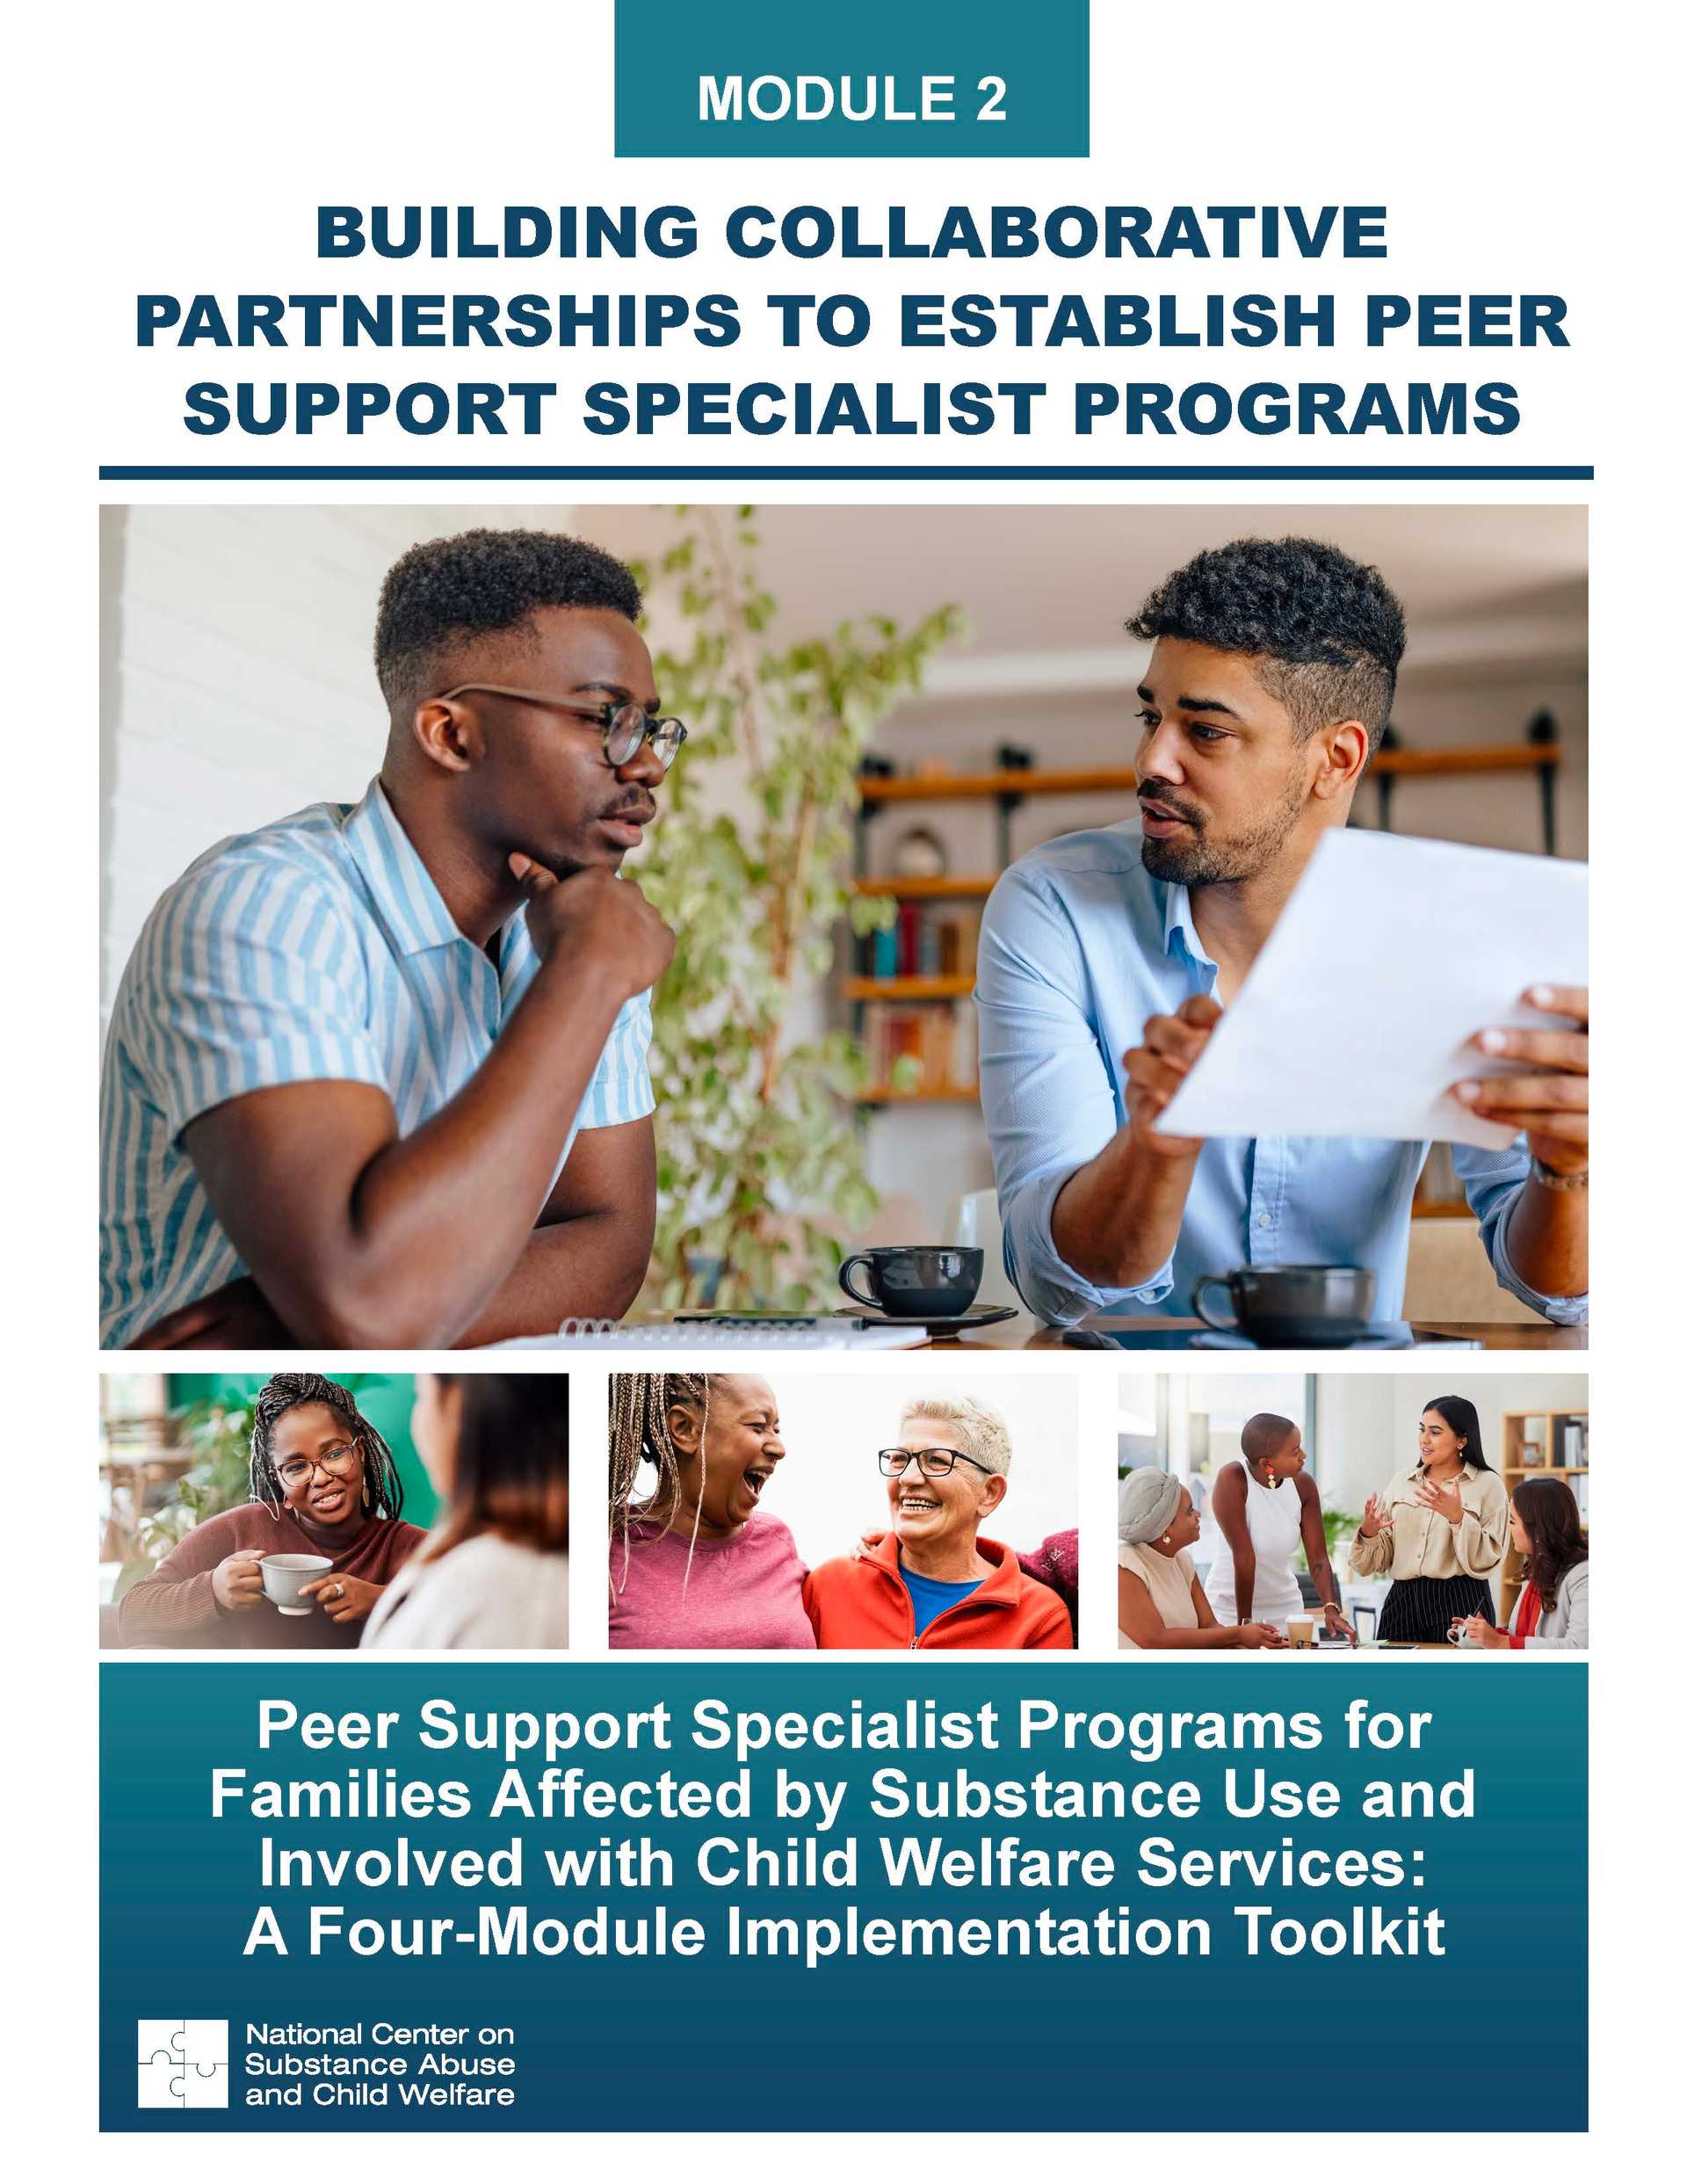 Module 2: Building Collaborative Partnerships to Establish Peer Support Specialist Programs